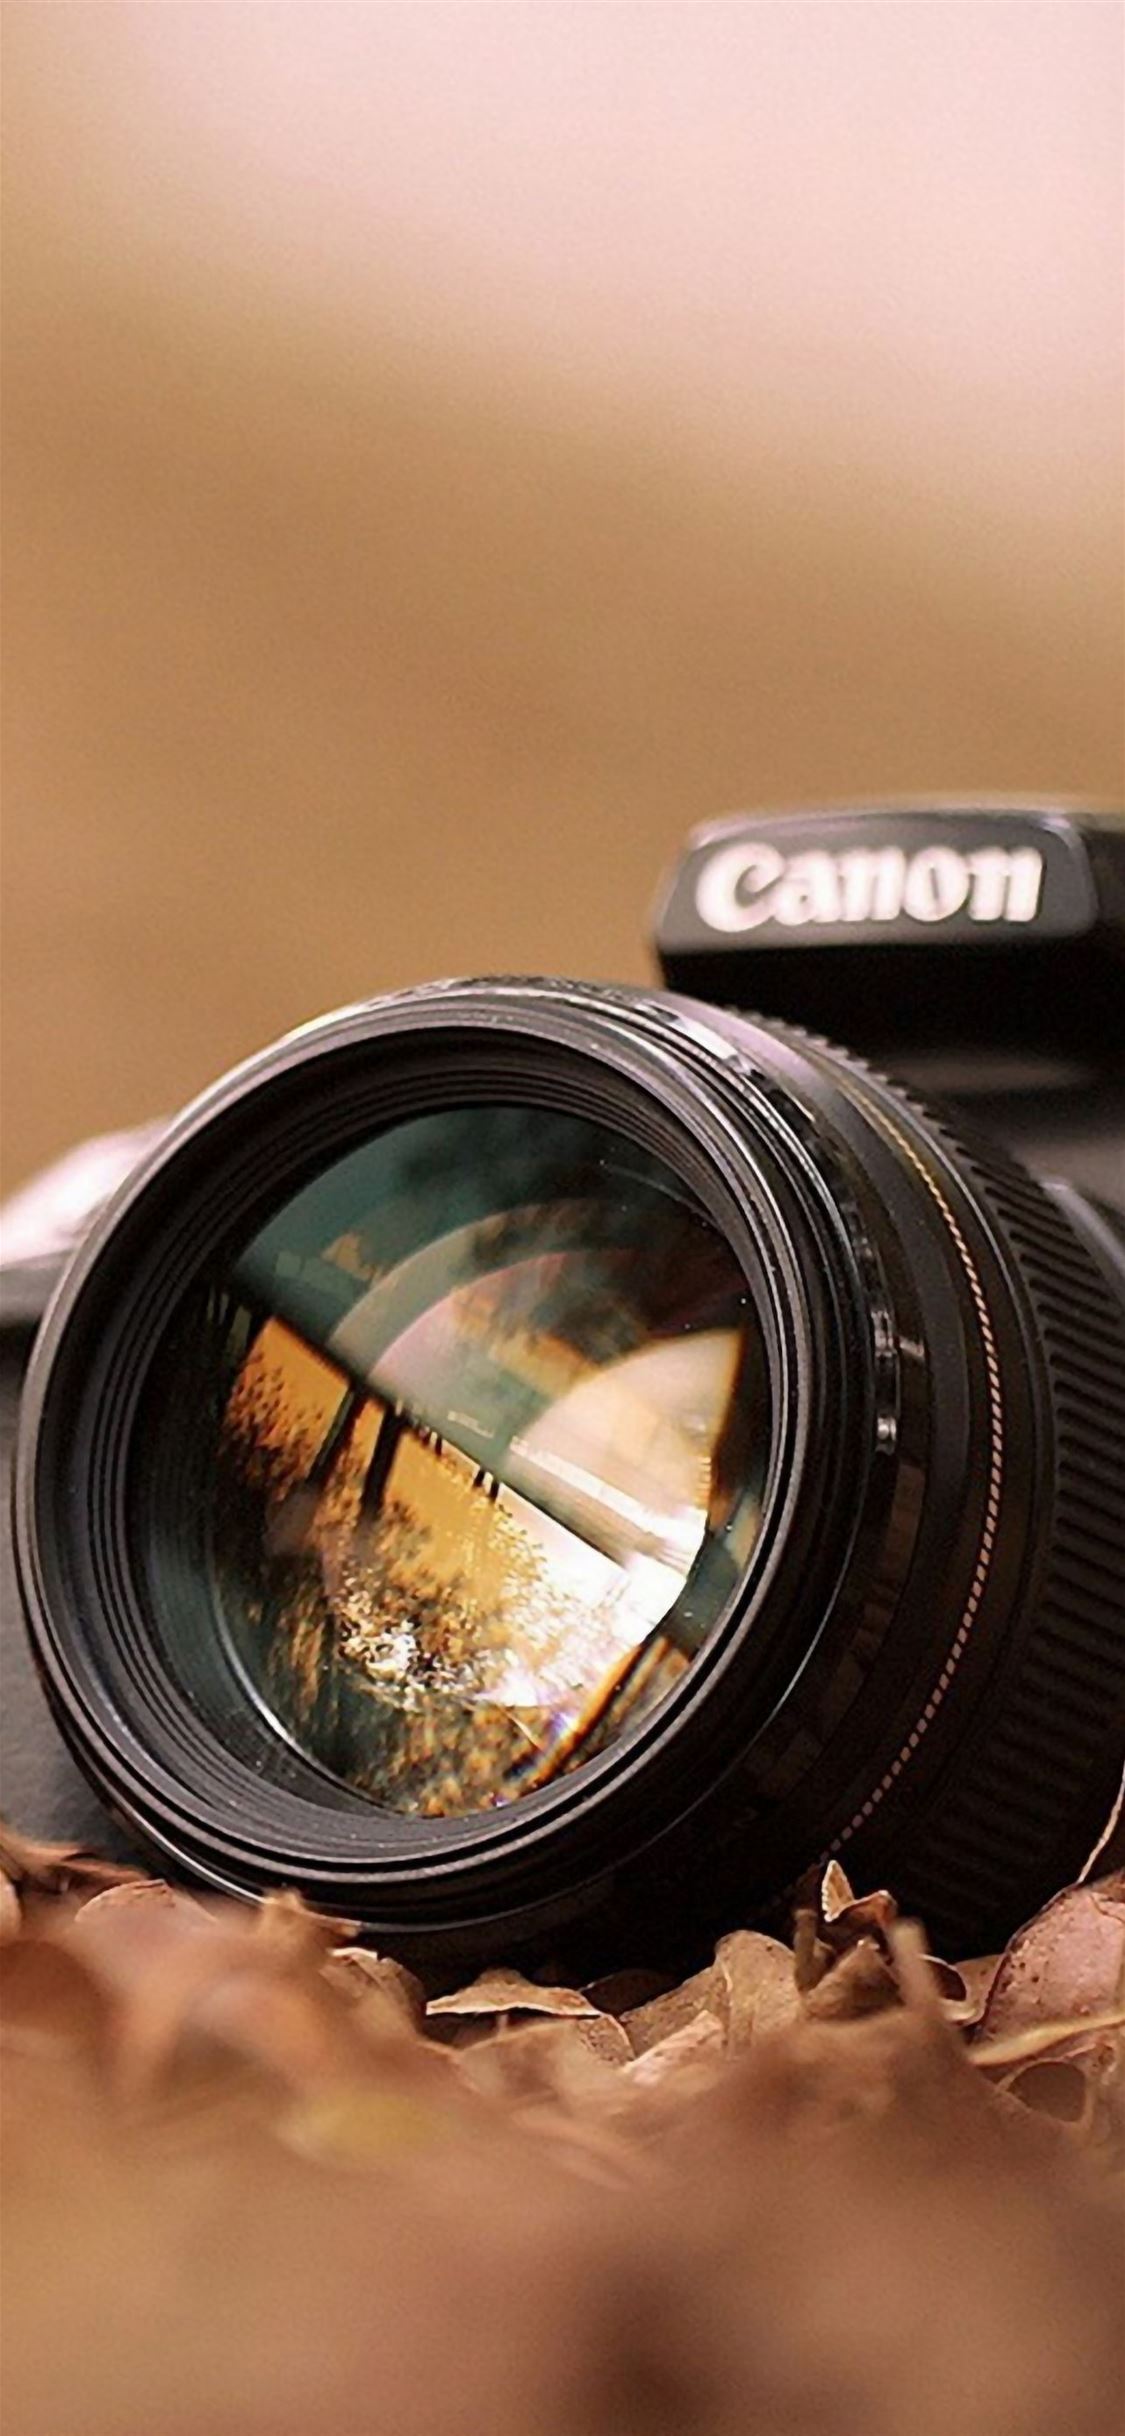 Canon Camera Macro Fall Leaves iPhone Wallpaper Free Download